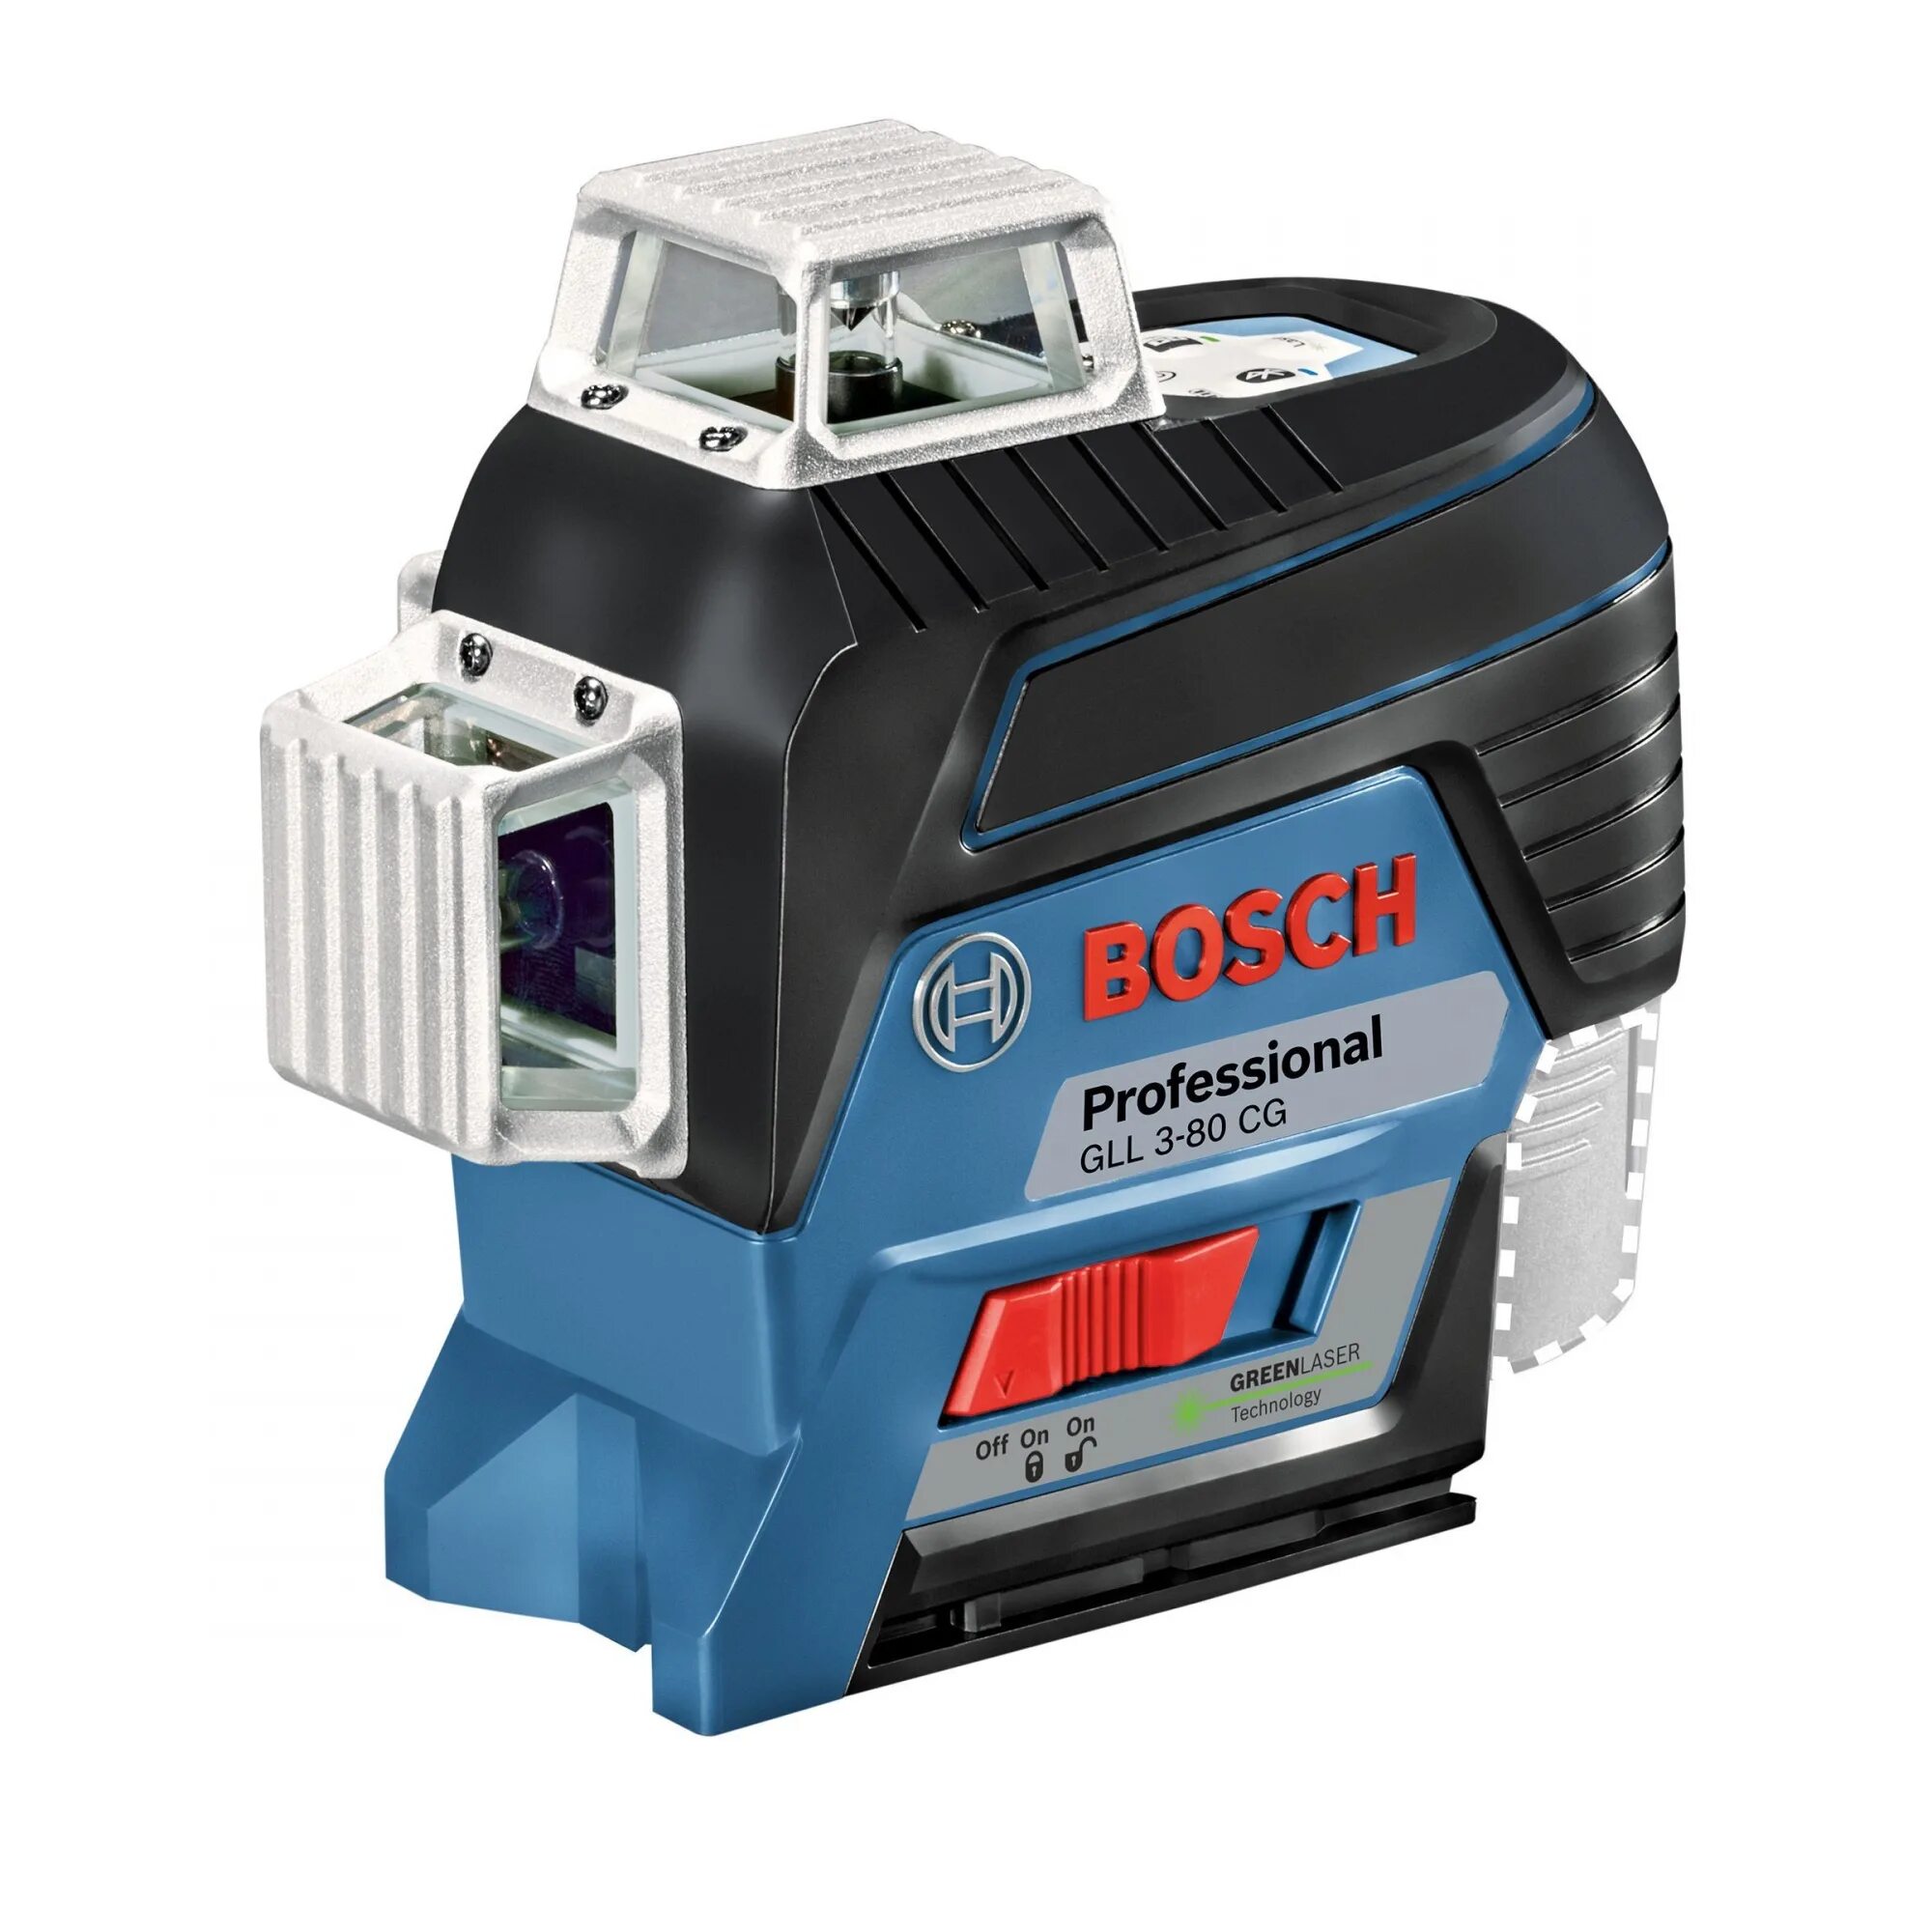 Лазерный уровень Bosch gll3-80c/. Лазерный нивелир GLL 3-80. Лазерный бош GLL 3-80 профессионал. Bosch GLL 3-80 CG (0601063t00).